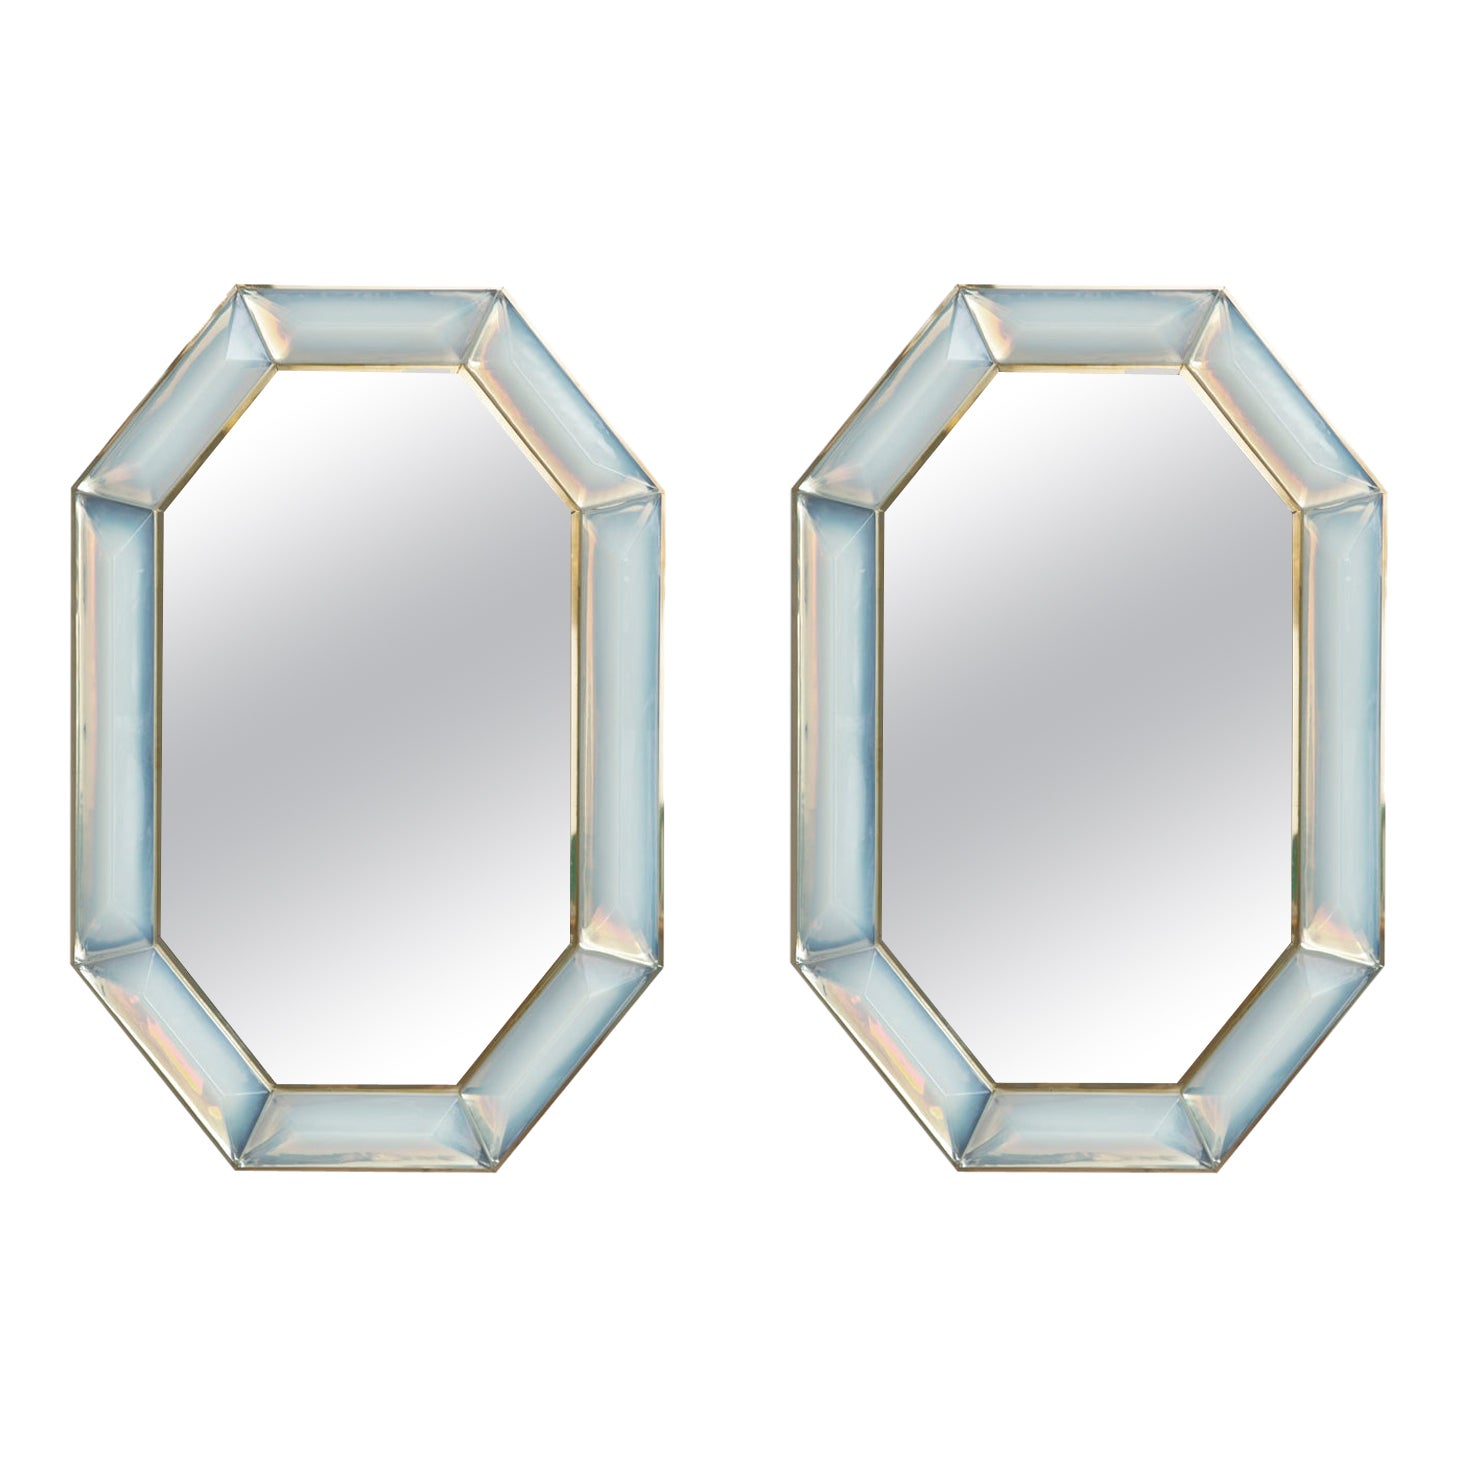 Paire de miroirs octogonaux en verre de Murano opalin irisé sur mesure, en stock